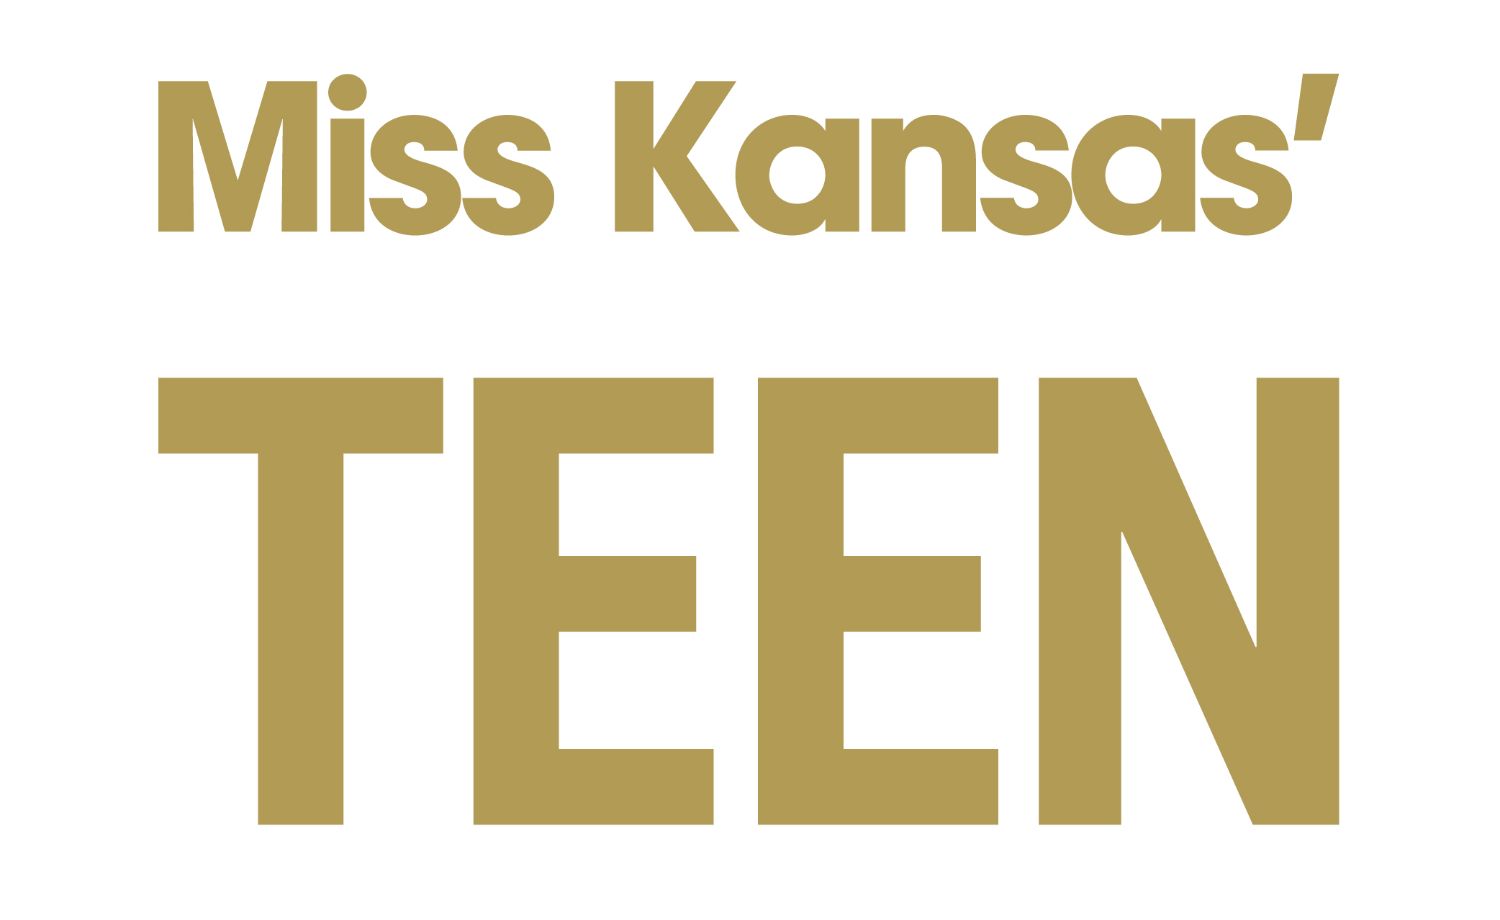 Miss Kansas' Teen Competition Mar 17-18